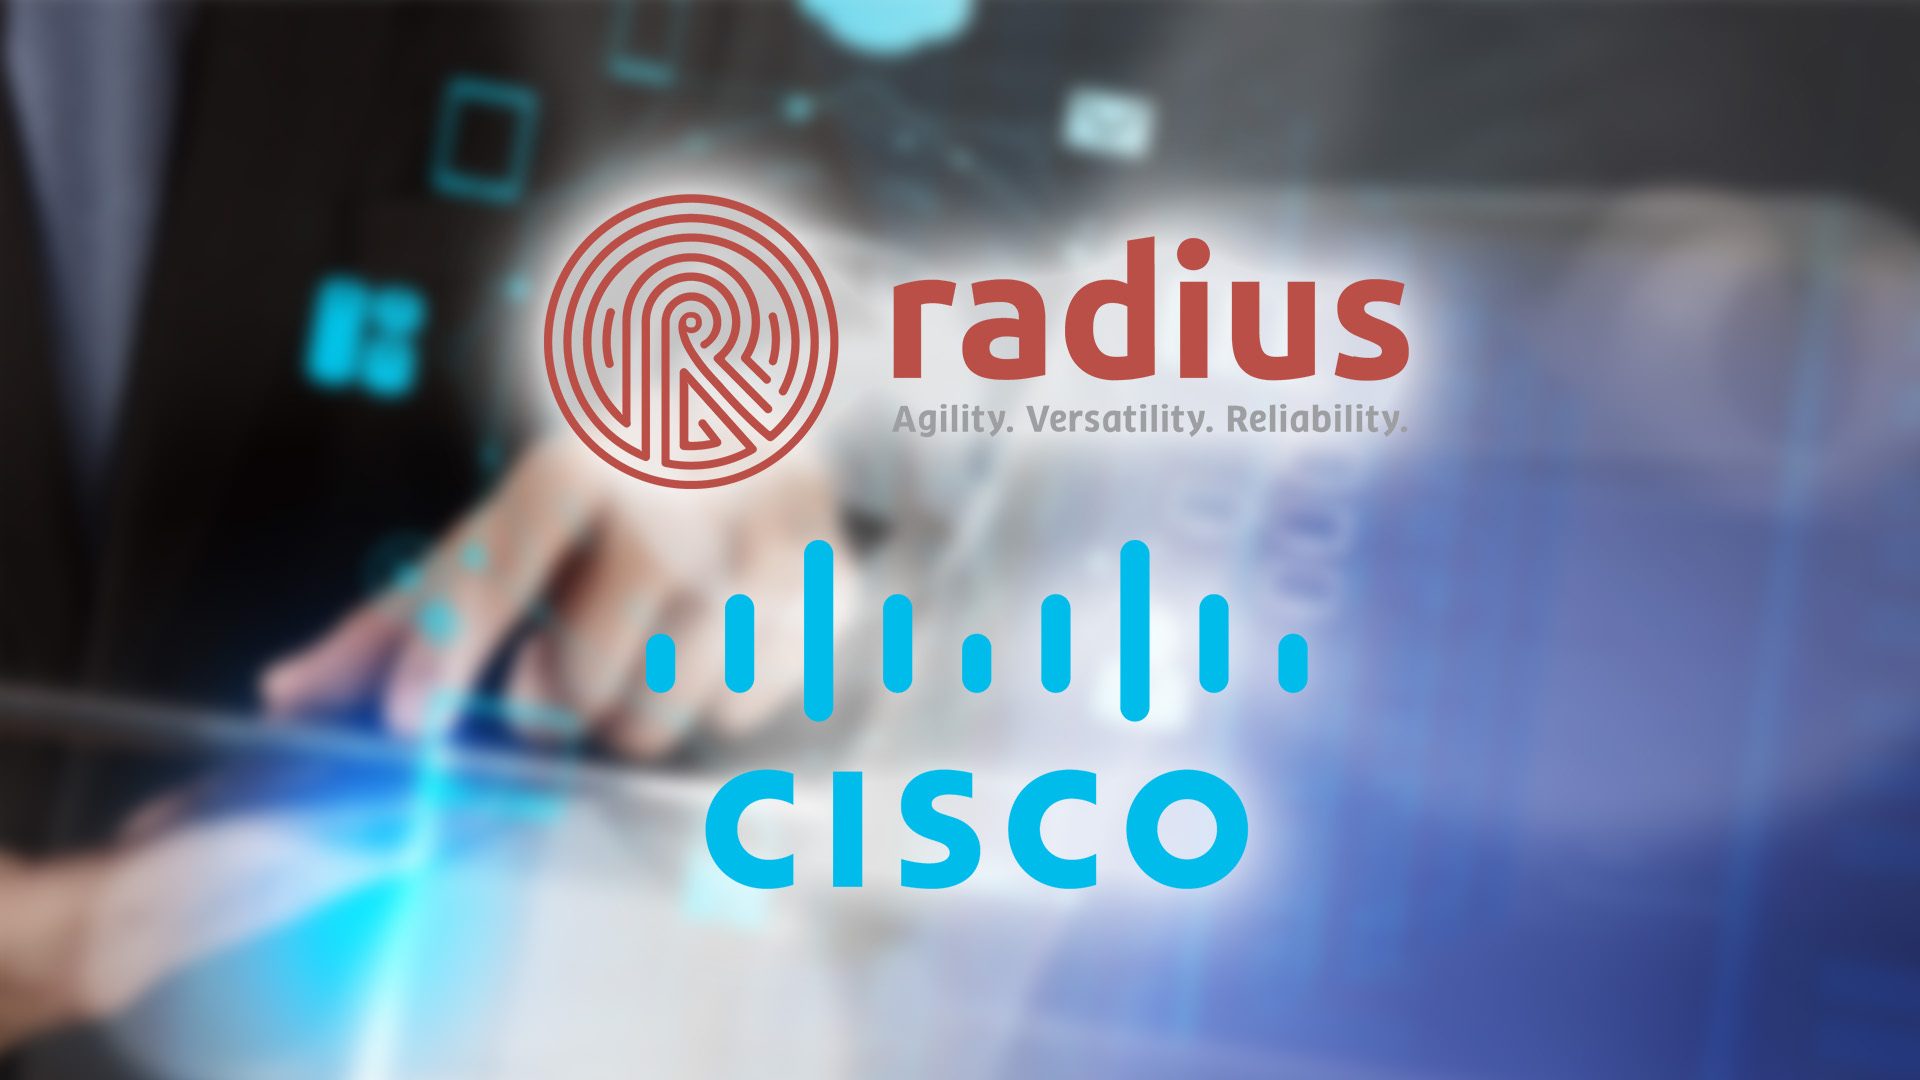 Cisco, Radius deepen partnership to provide premier connectivity for businesses